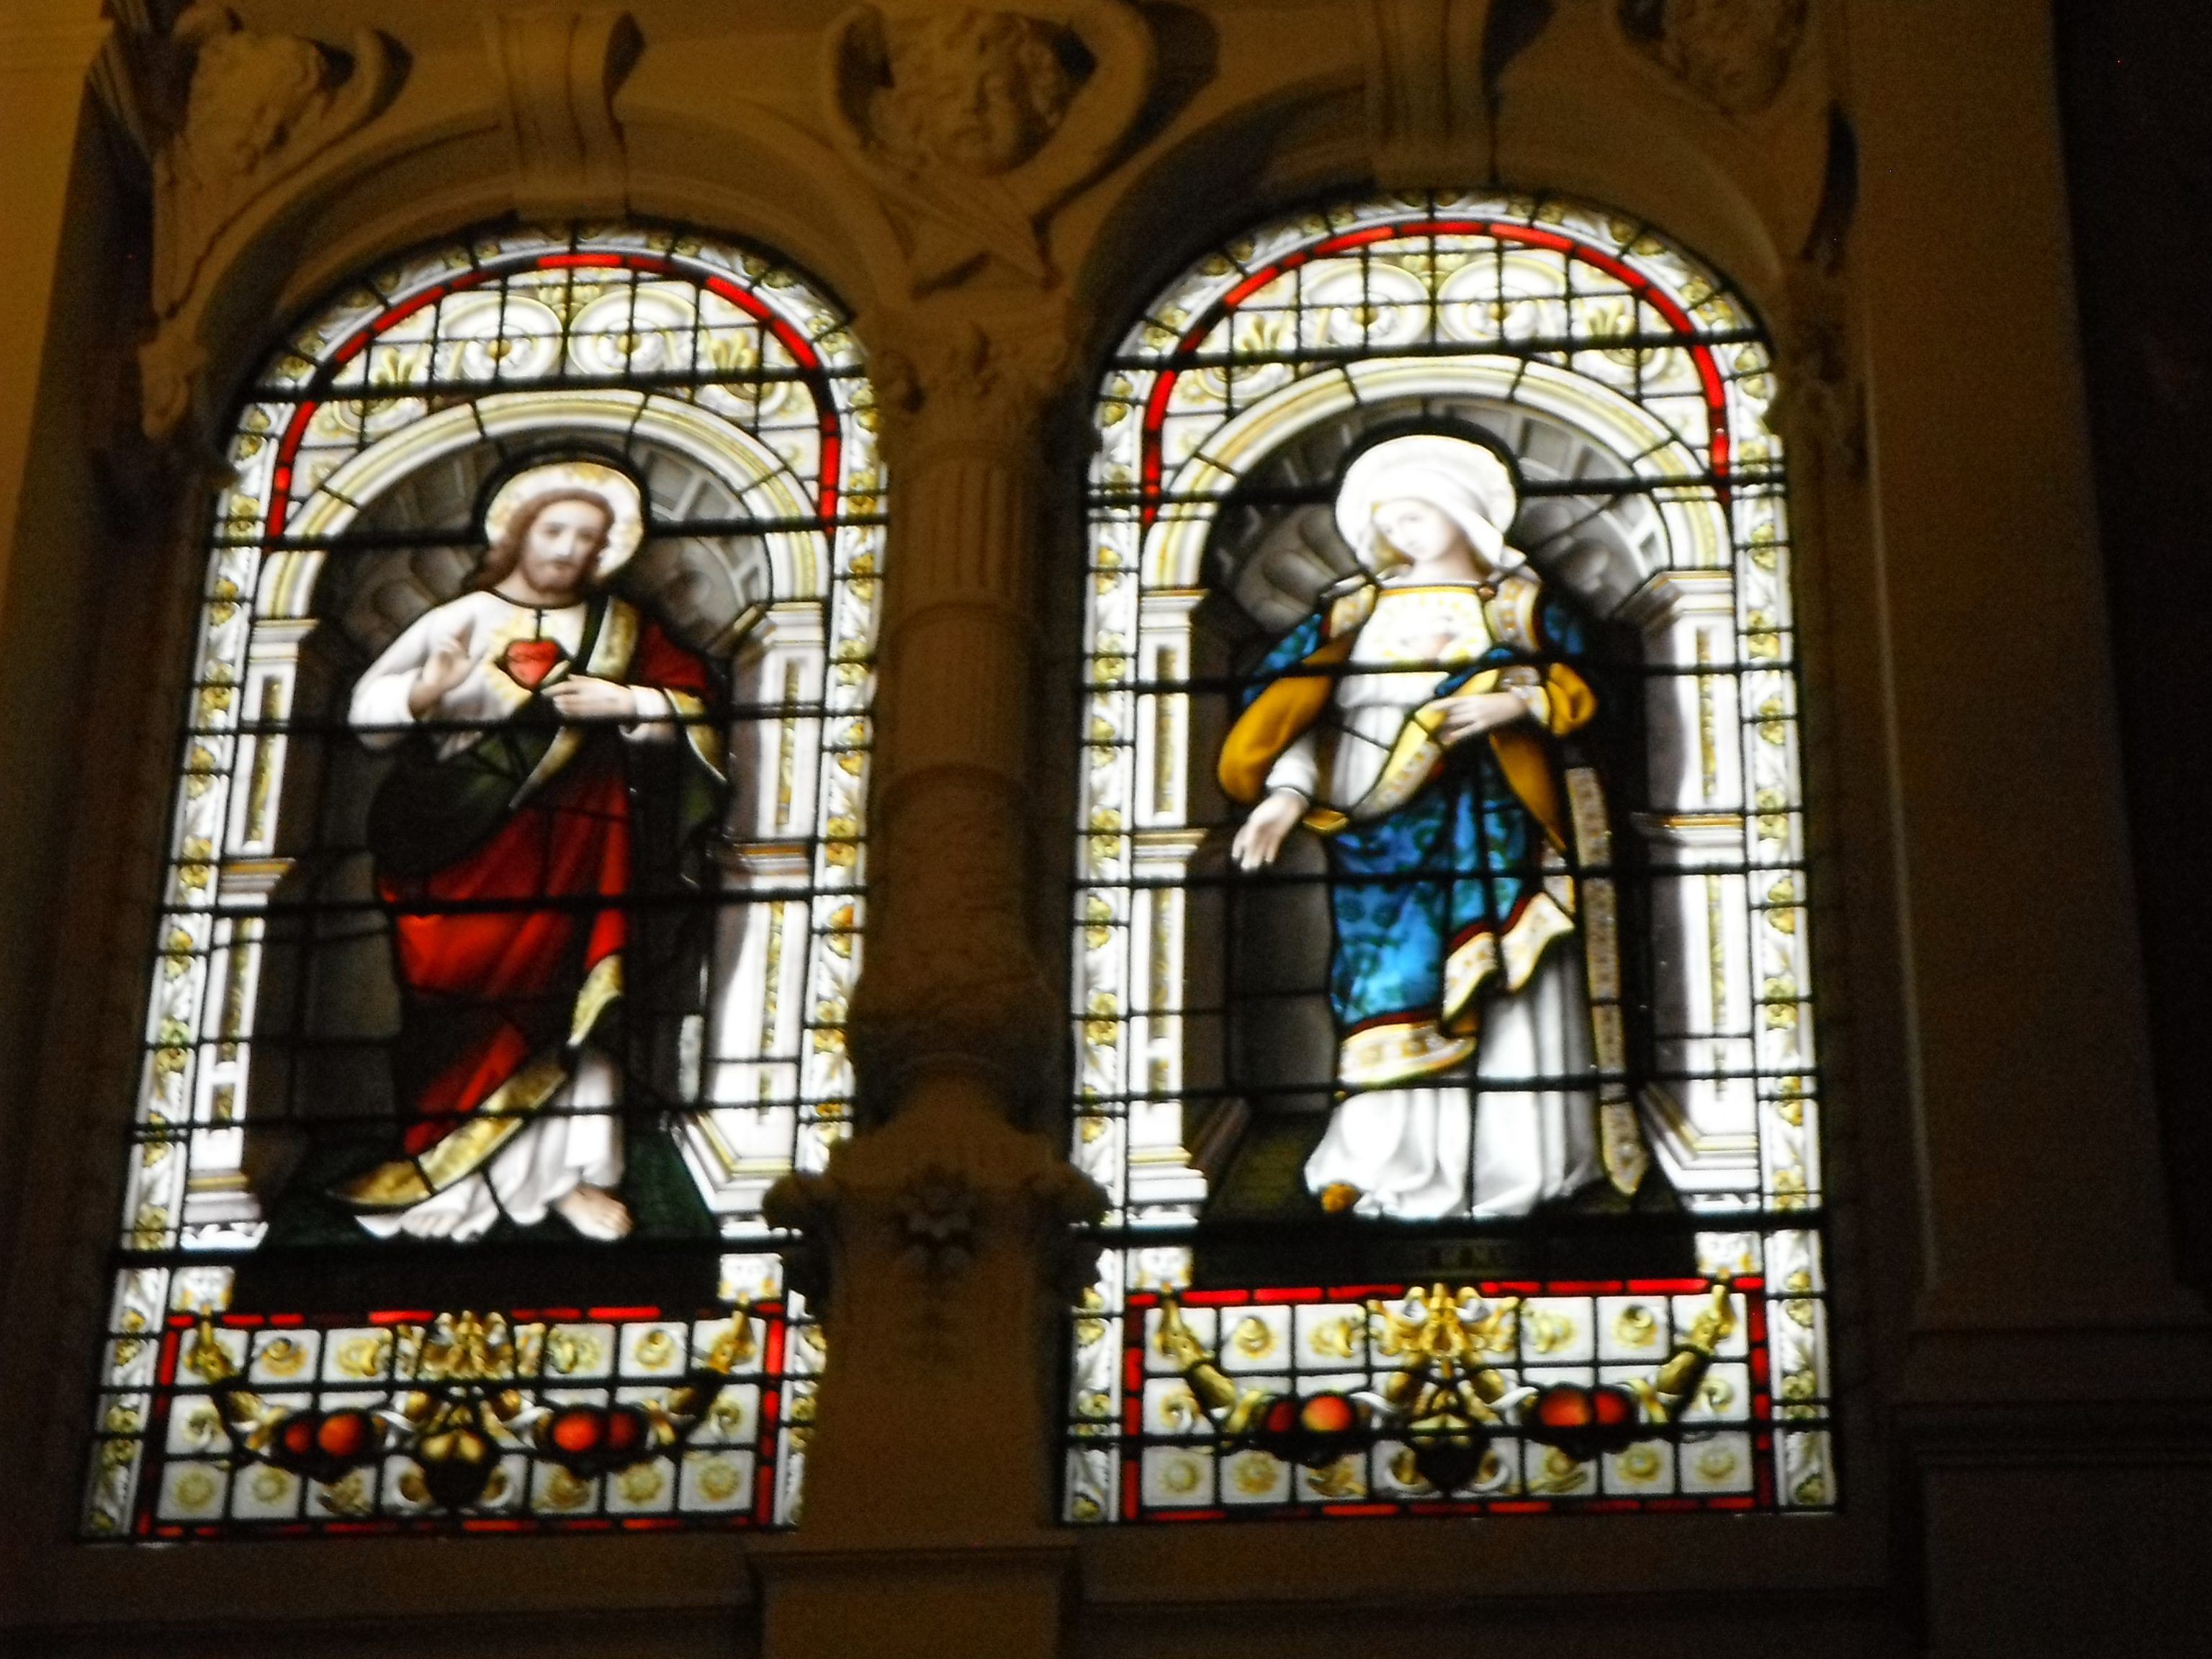 Photo taken by me - stained glass windows - Preston church